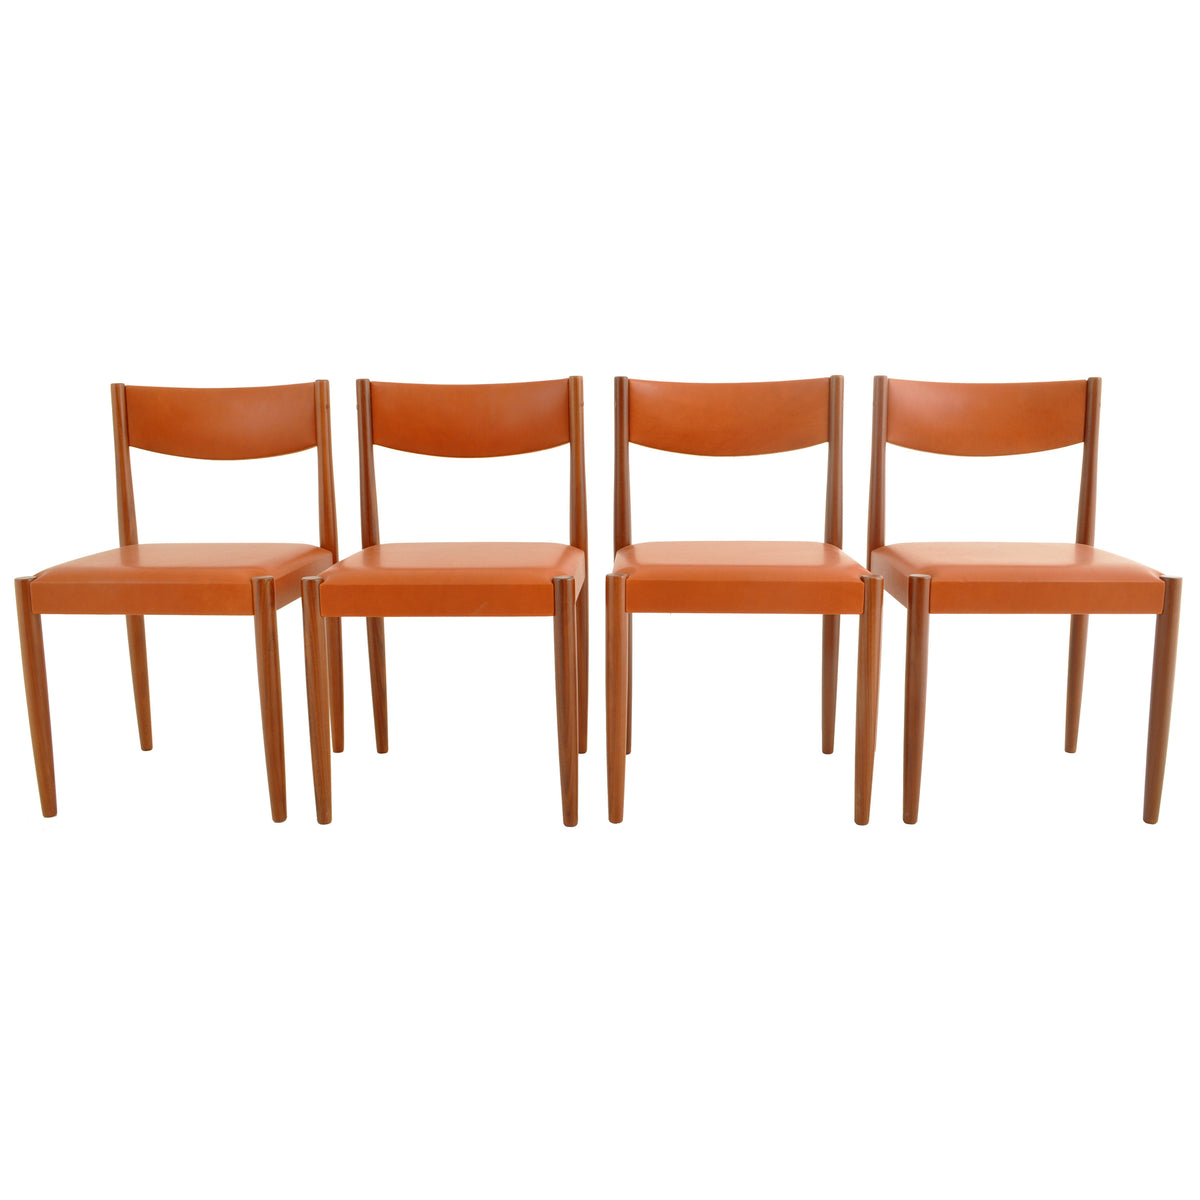 Set of 4 Danish Mid-Century Modern Teak Dining Chairs, 1960s